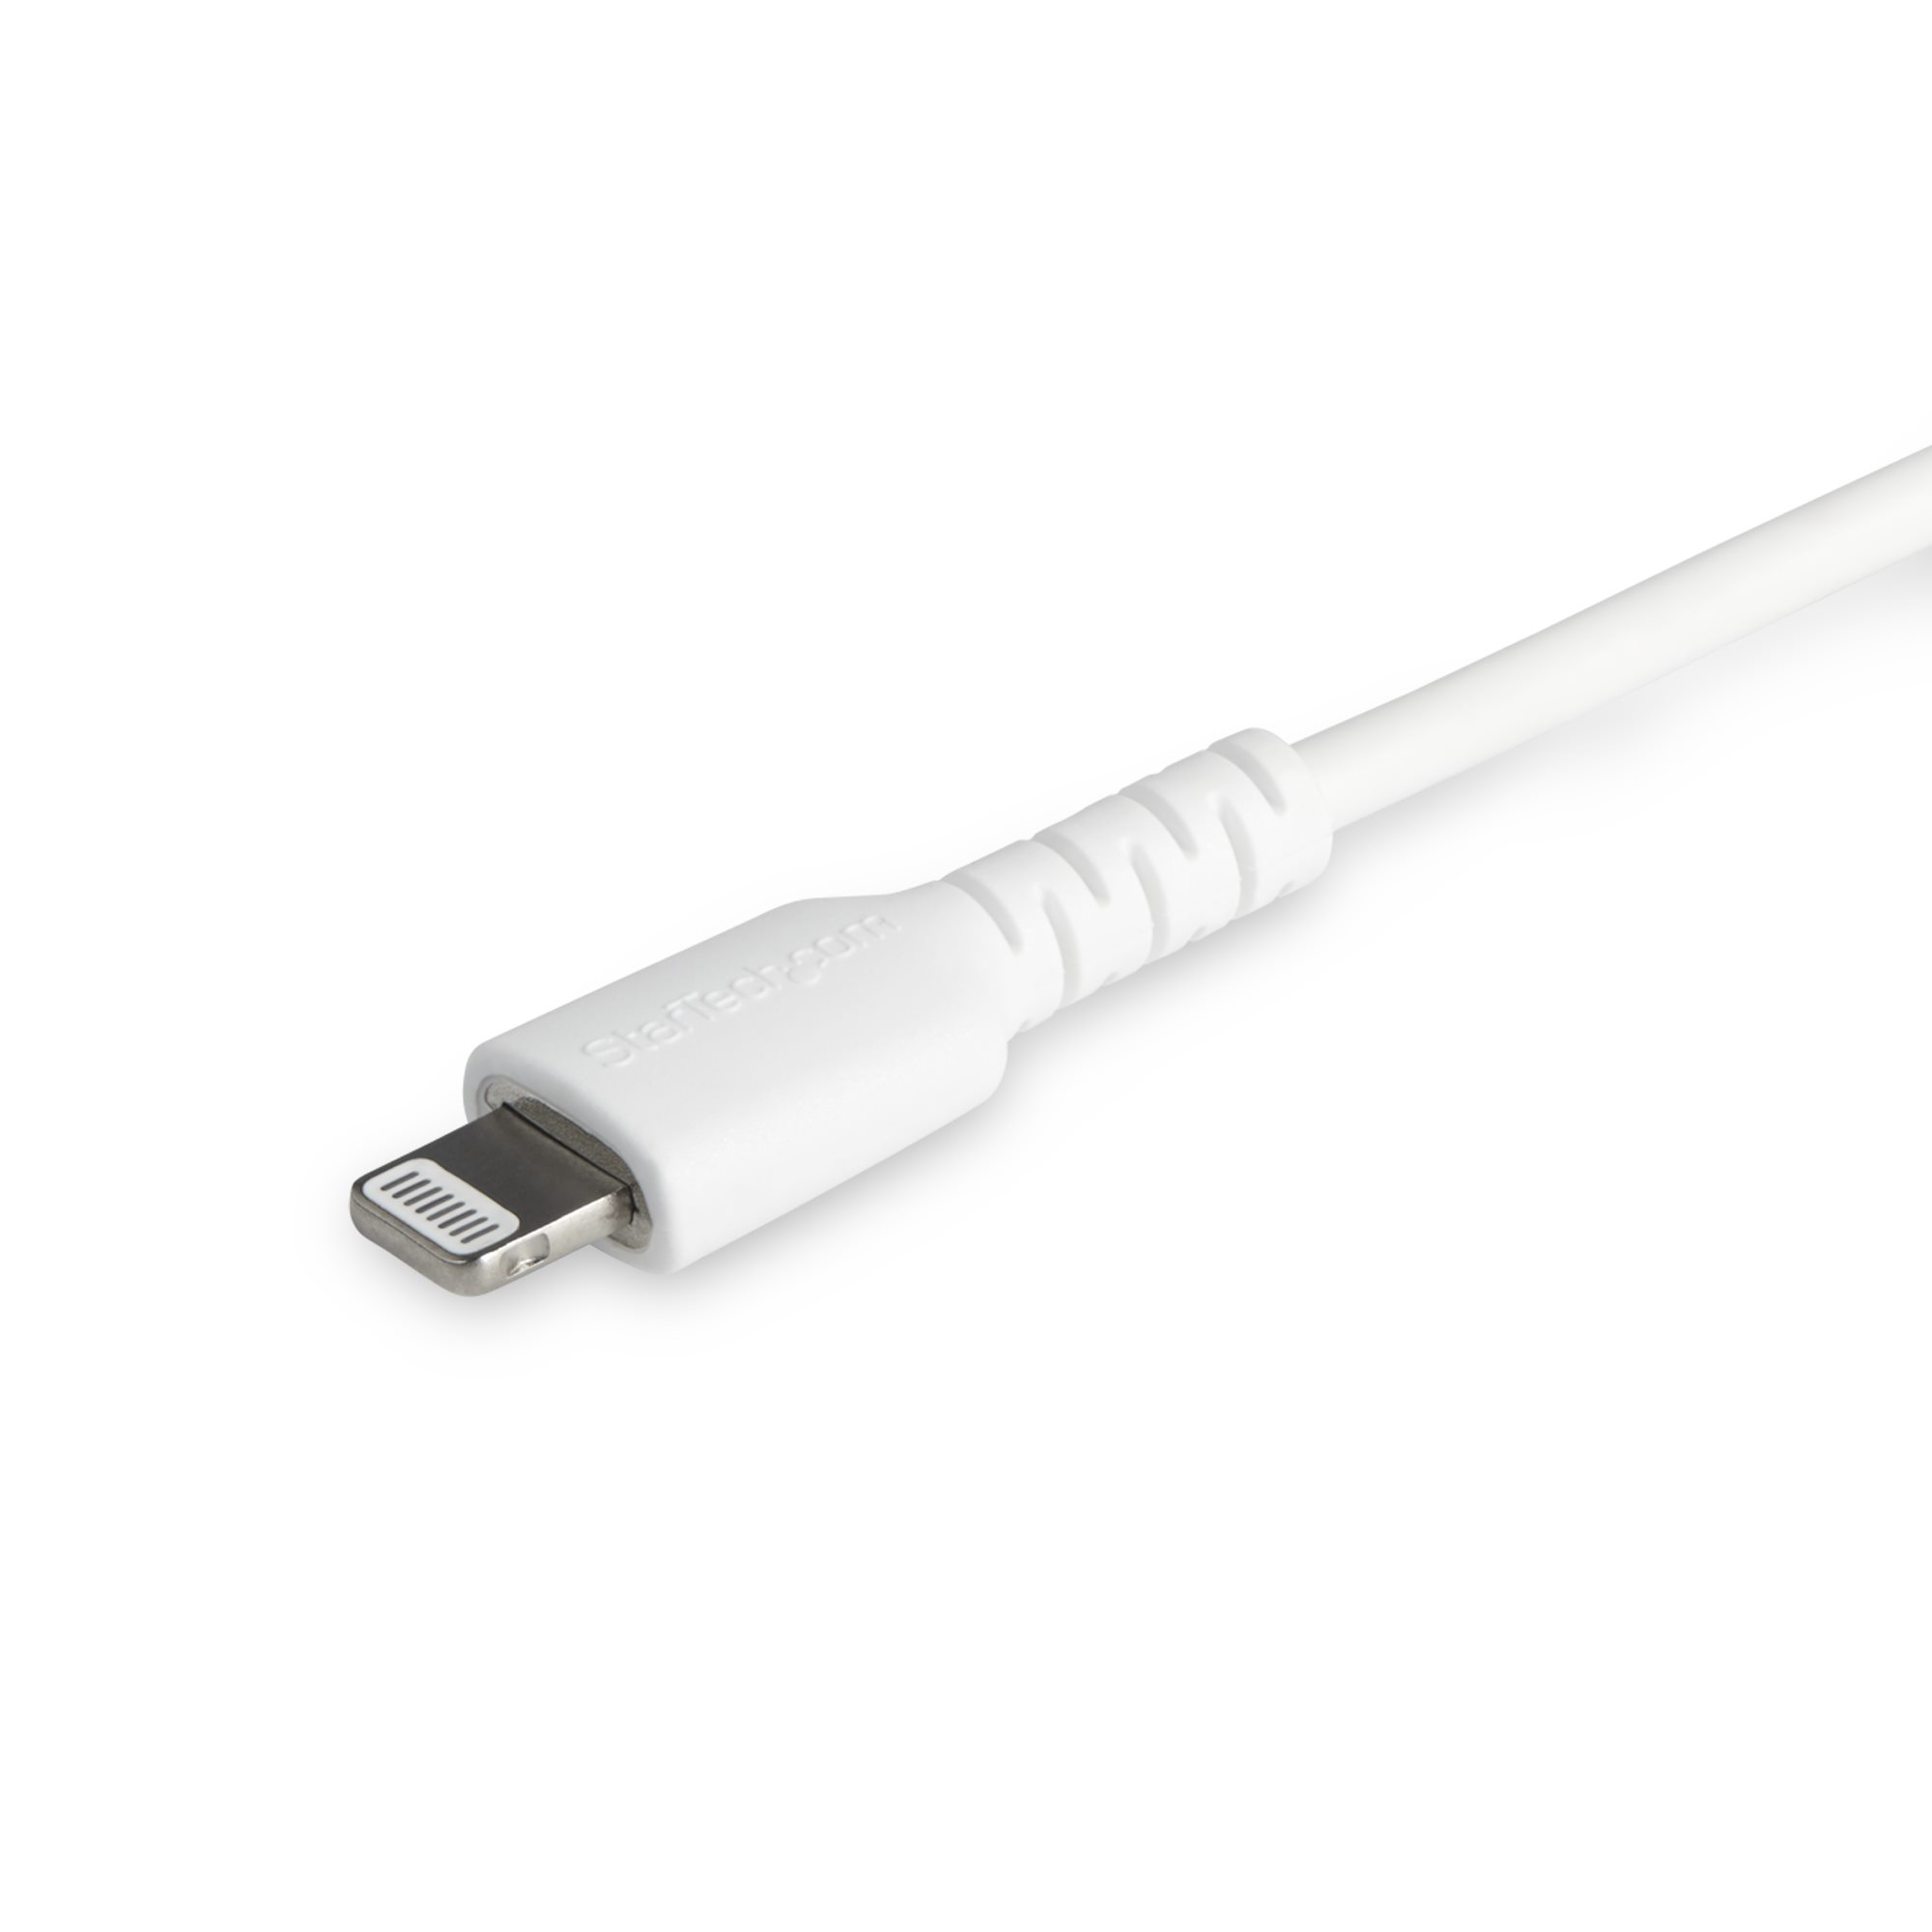 onder Extra vervangen 6ft/2m Durable USB-C to Lightning Cable - Lightning Cables | StarTech.com